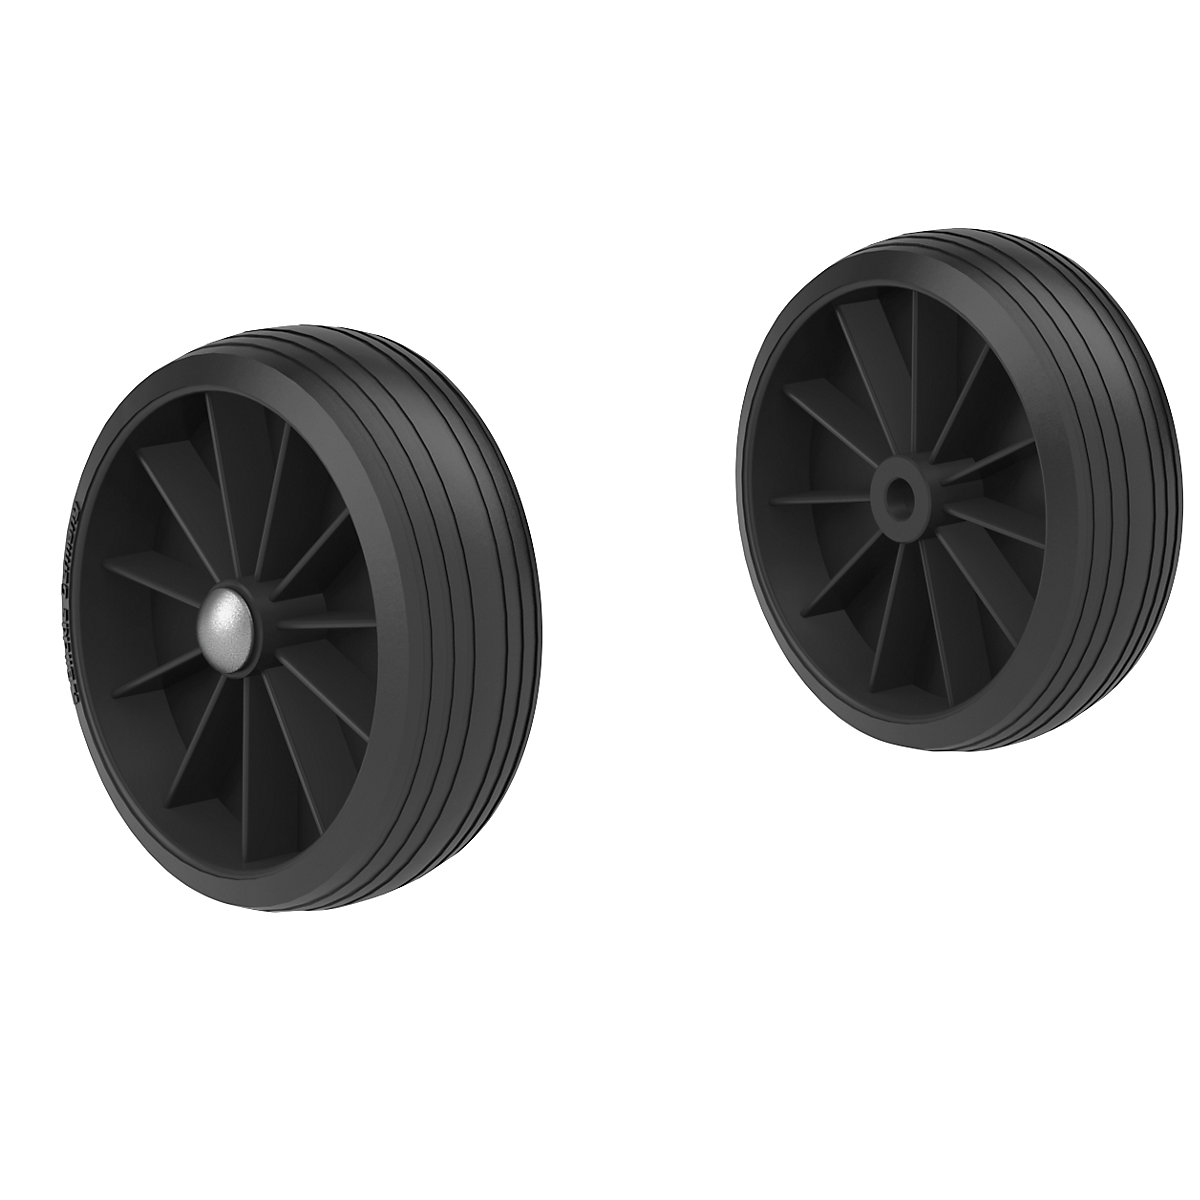 EUROKRAFTpro – Wheel set for sack truck, pack of 2, solid rubber tyres